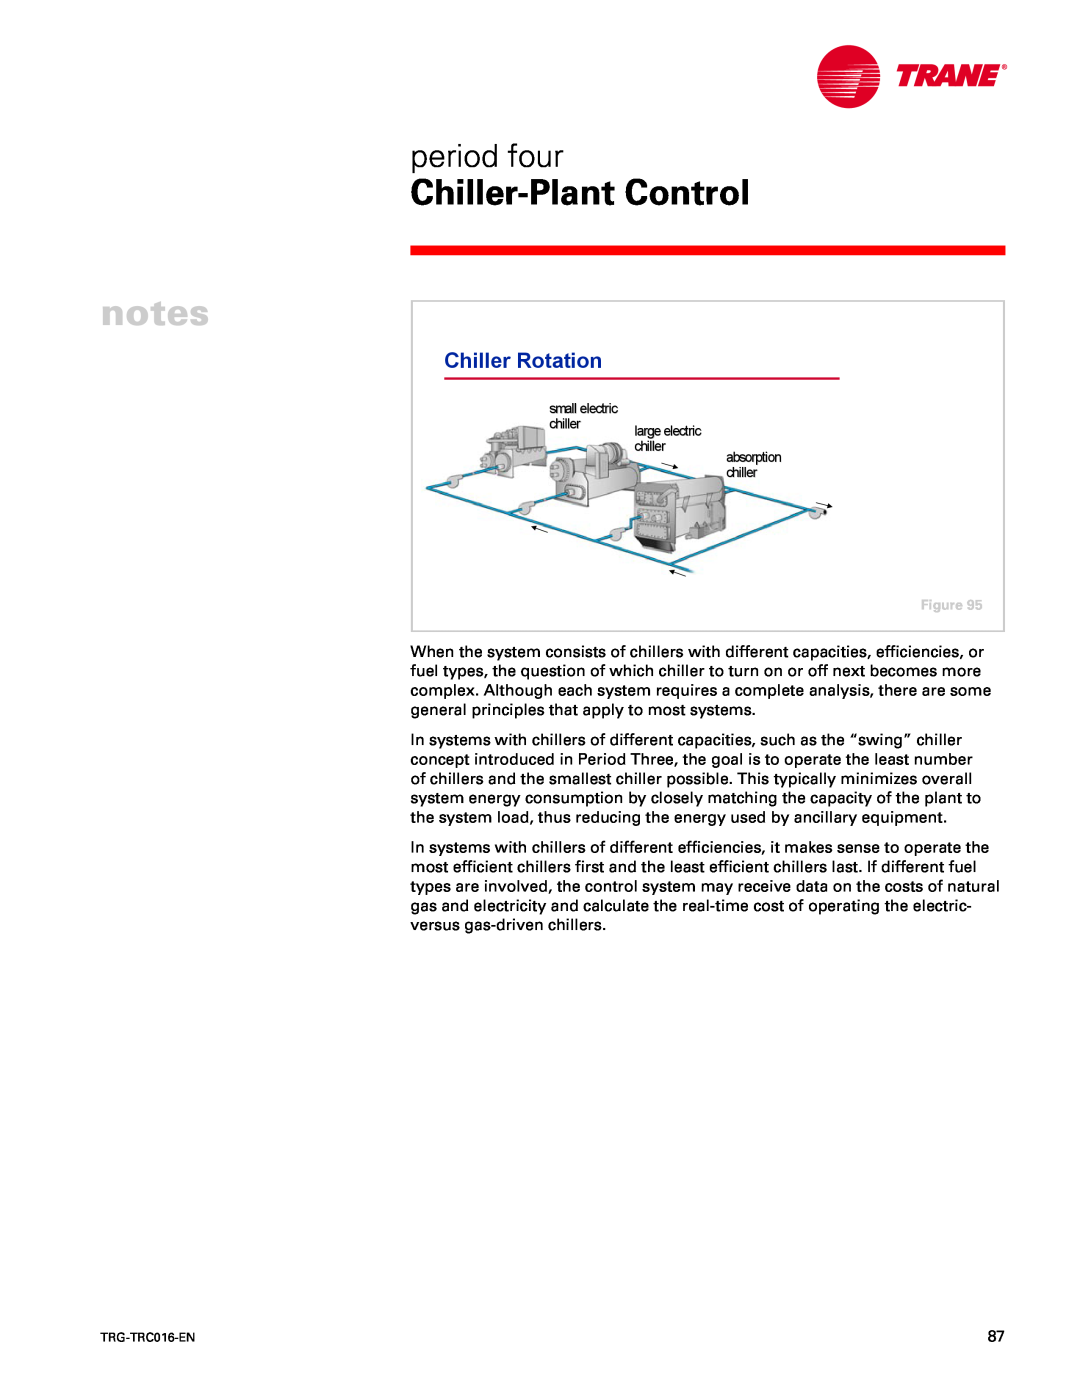 Trane TRG-TRC016-EN manual notes, Chiller-PlantControl, period four, Chiller Rotation 